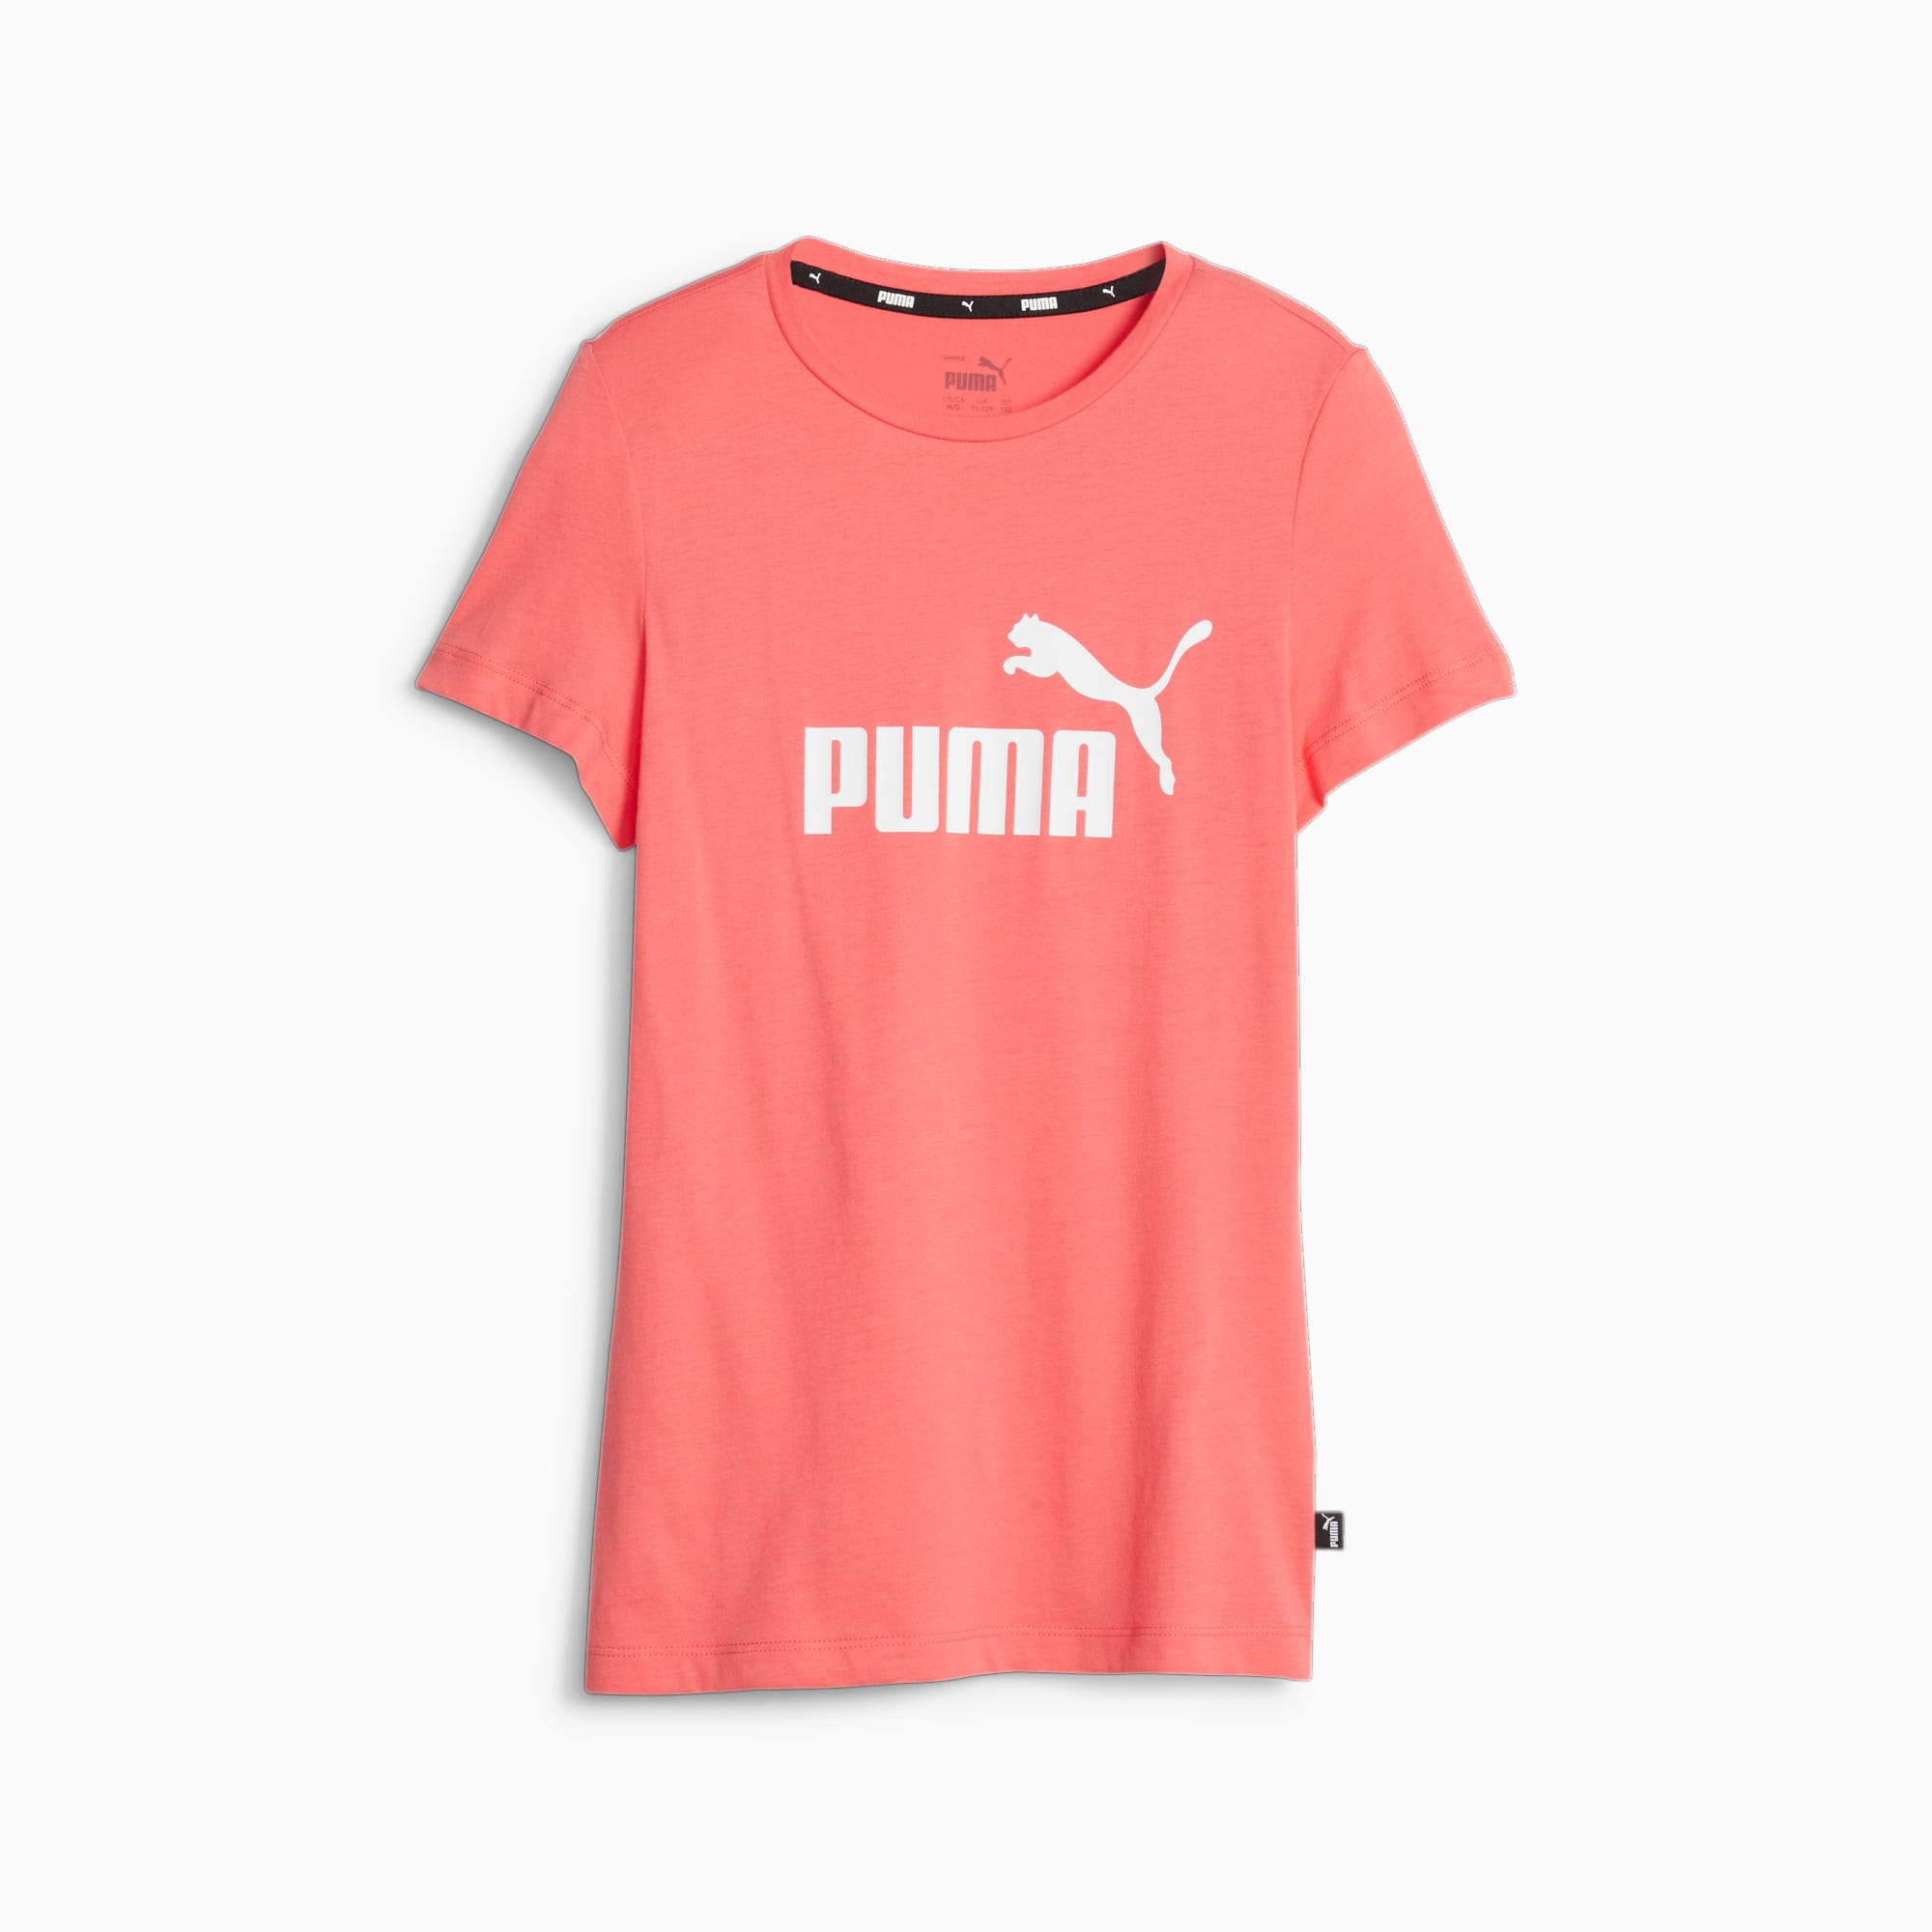 PUMA Essentials Logo Youth T-Shirt, Electric Blush, Size 164, Clothing